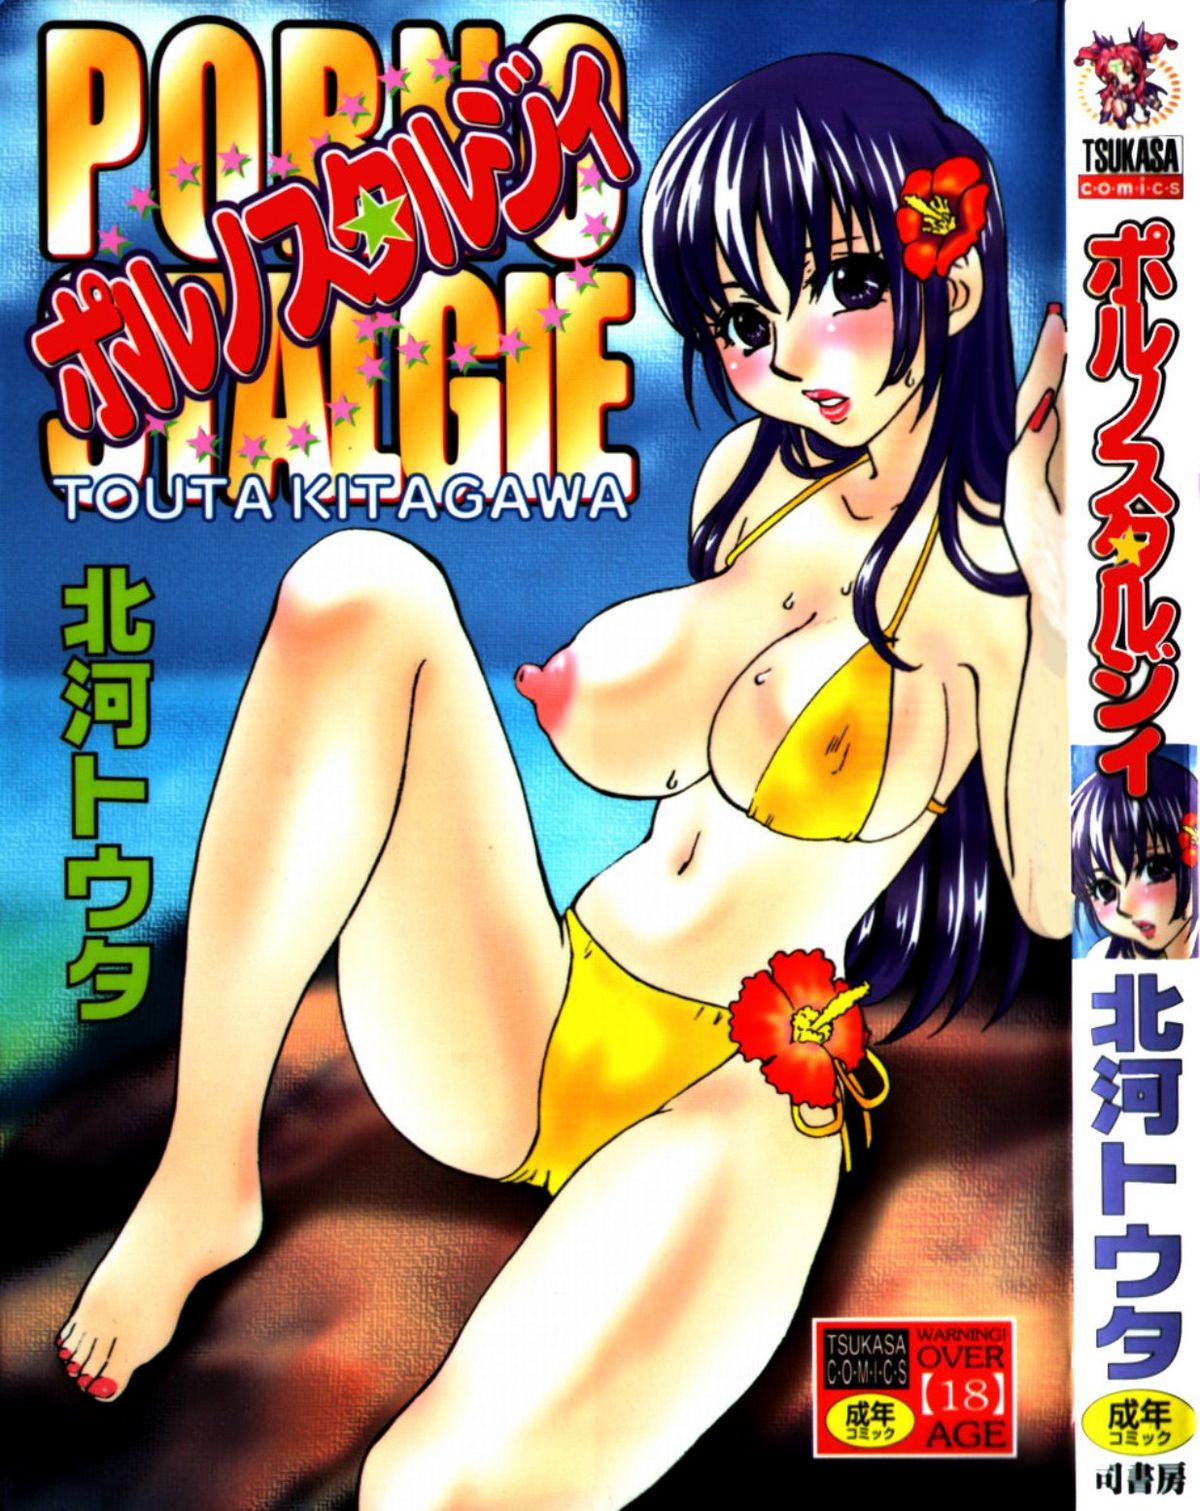 Touta Kitagawa - Porno Stalgie [北河トウタ] ポルノスタルジィ